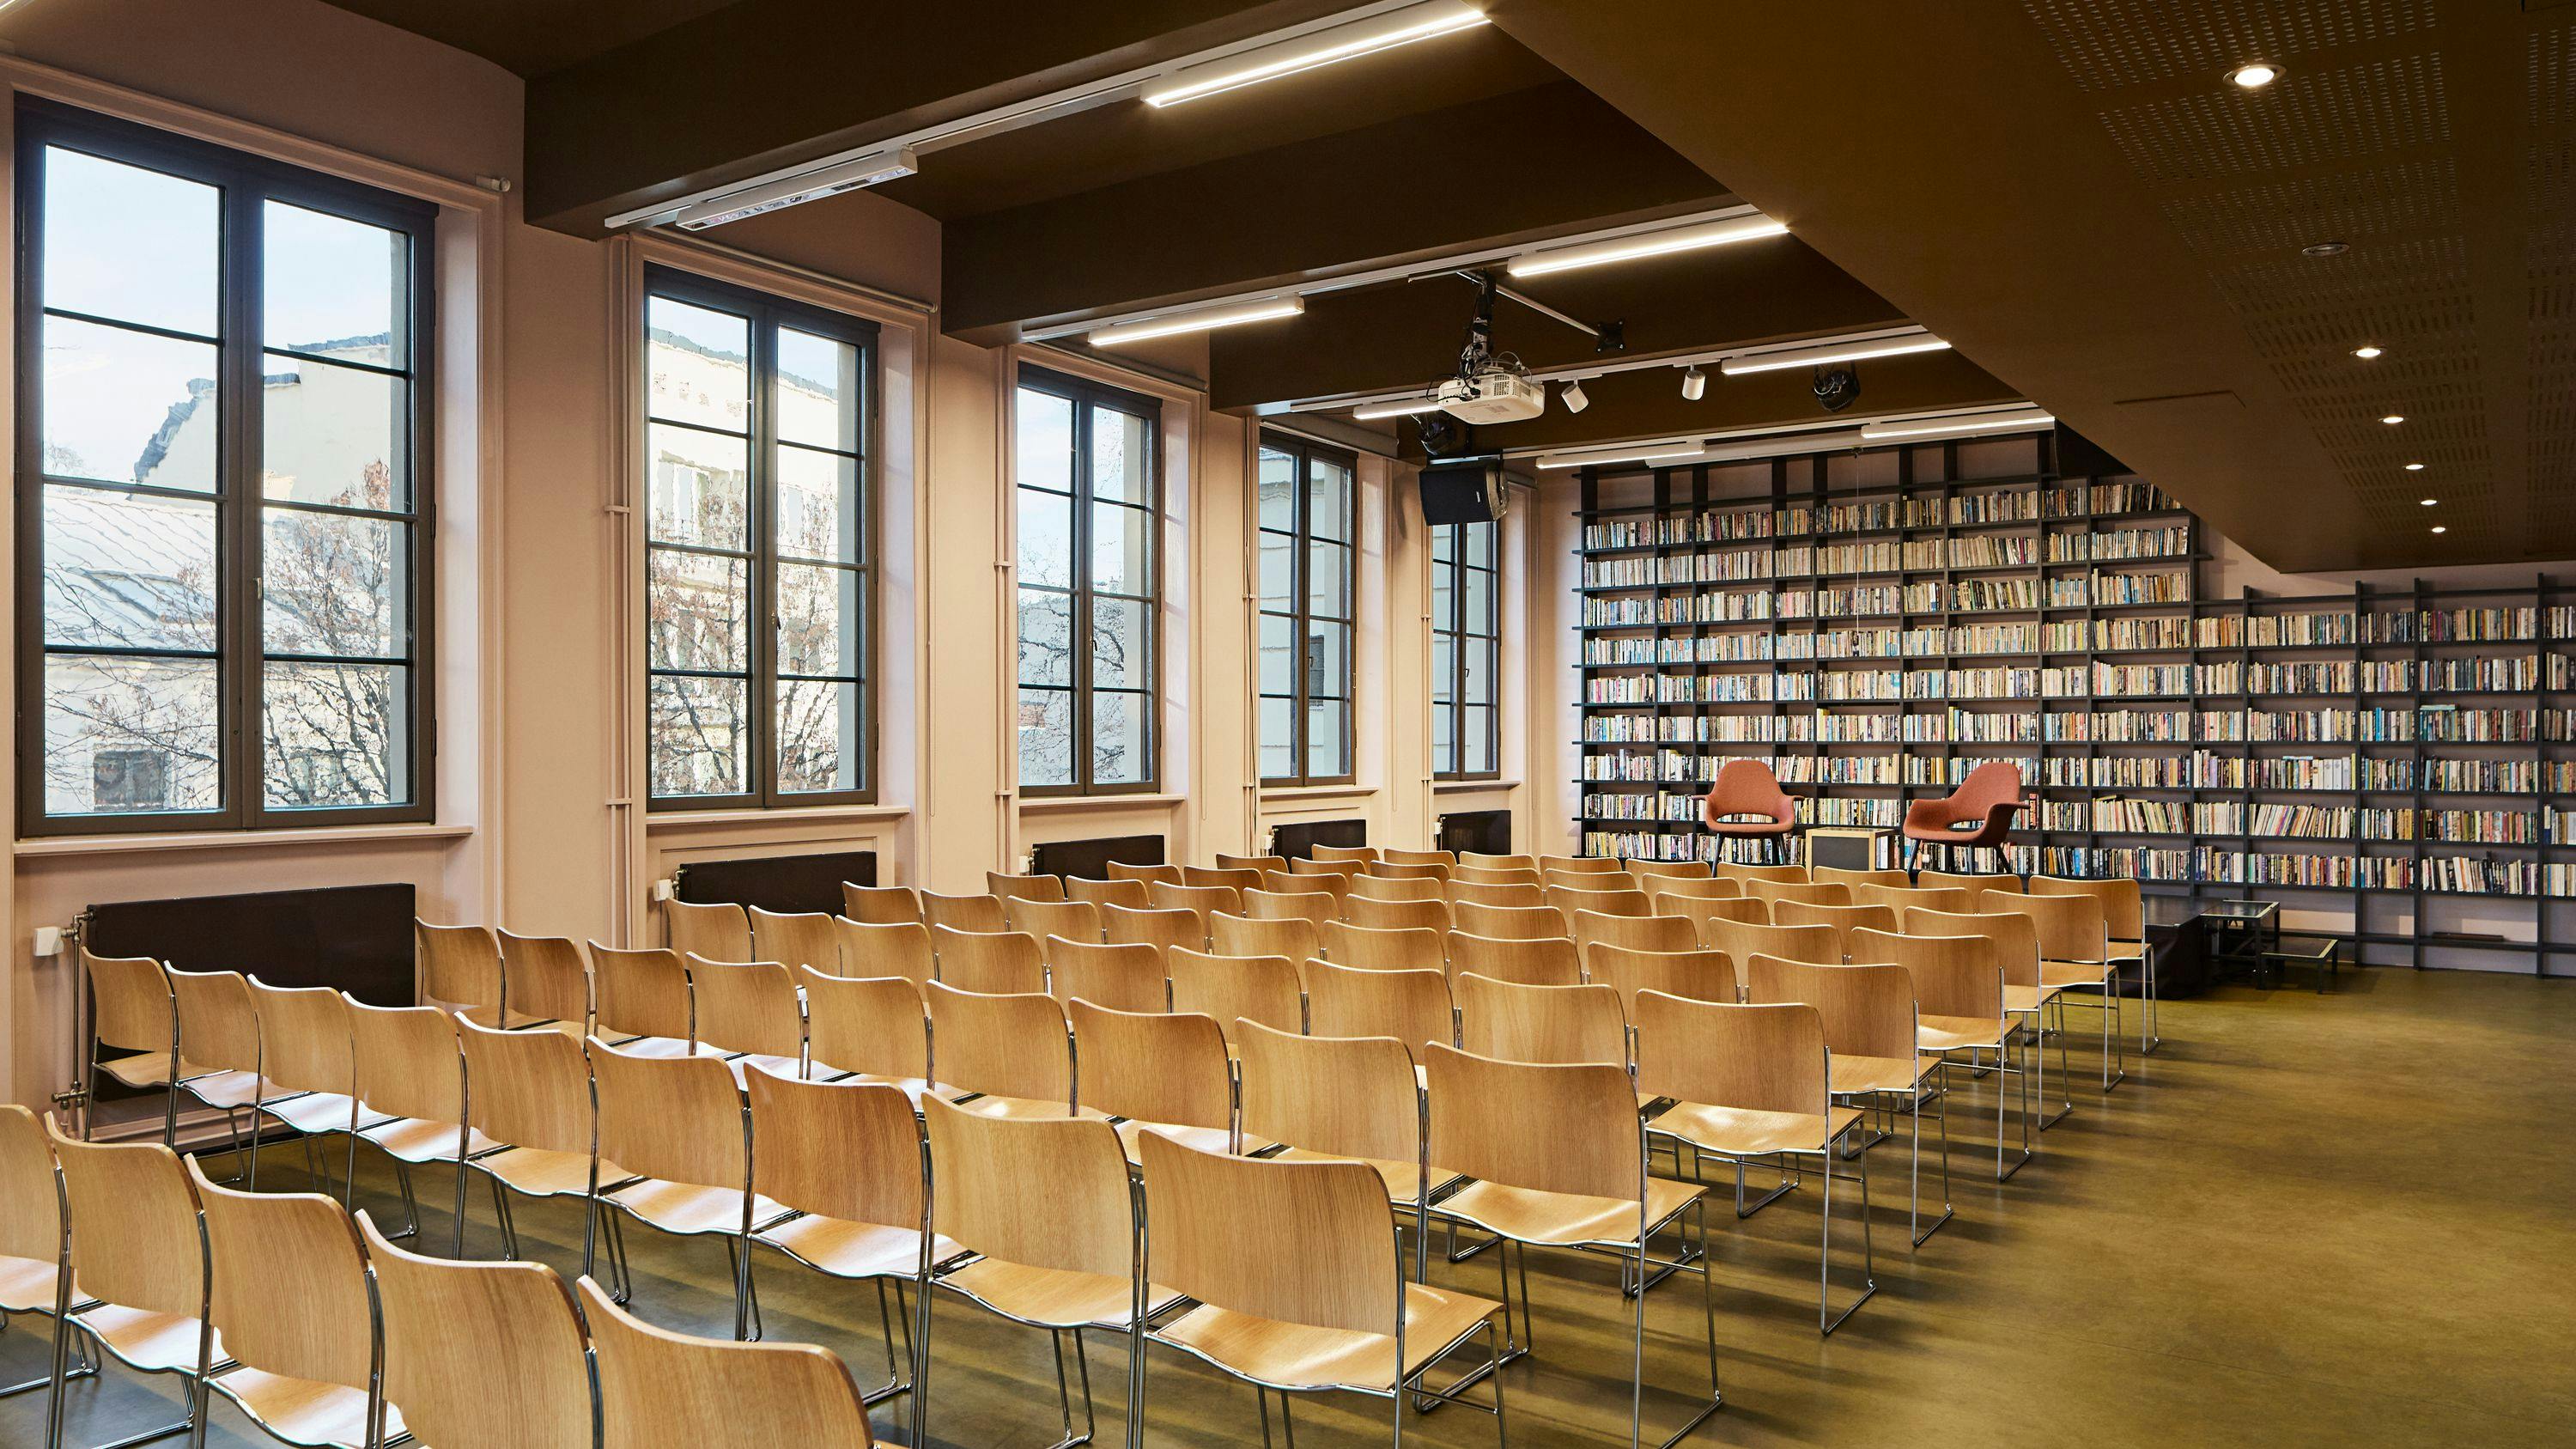 Bilde av salen Nedjma på Litteraturhuset med mange tomme stoler